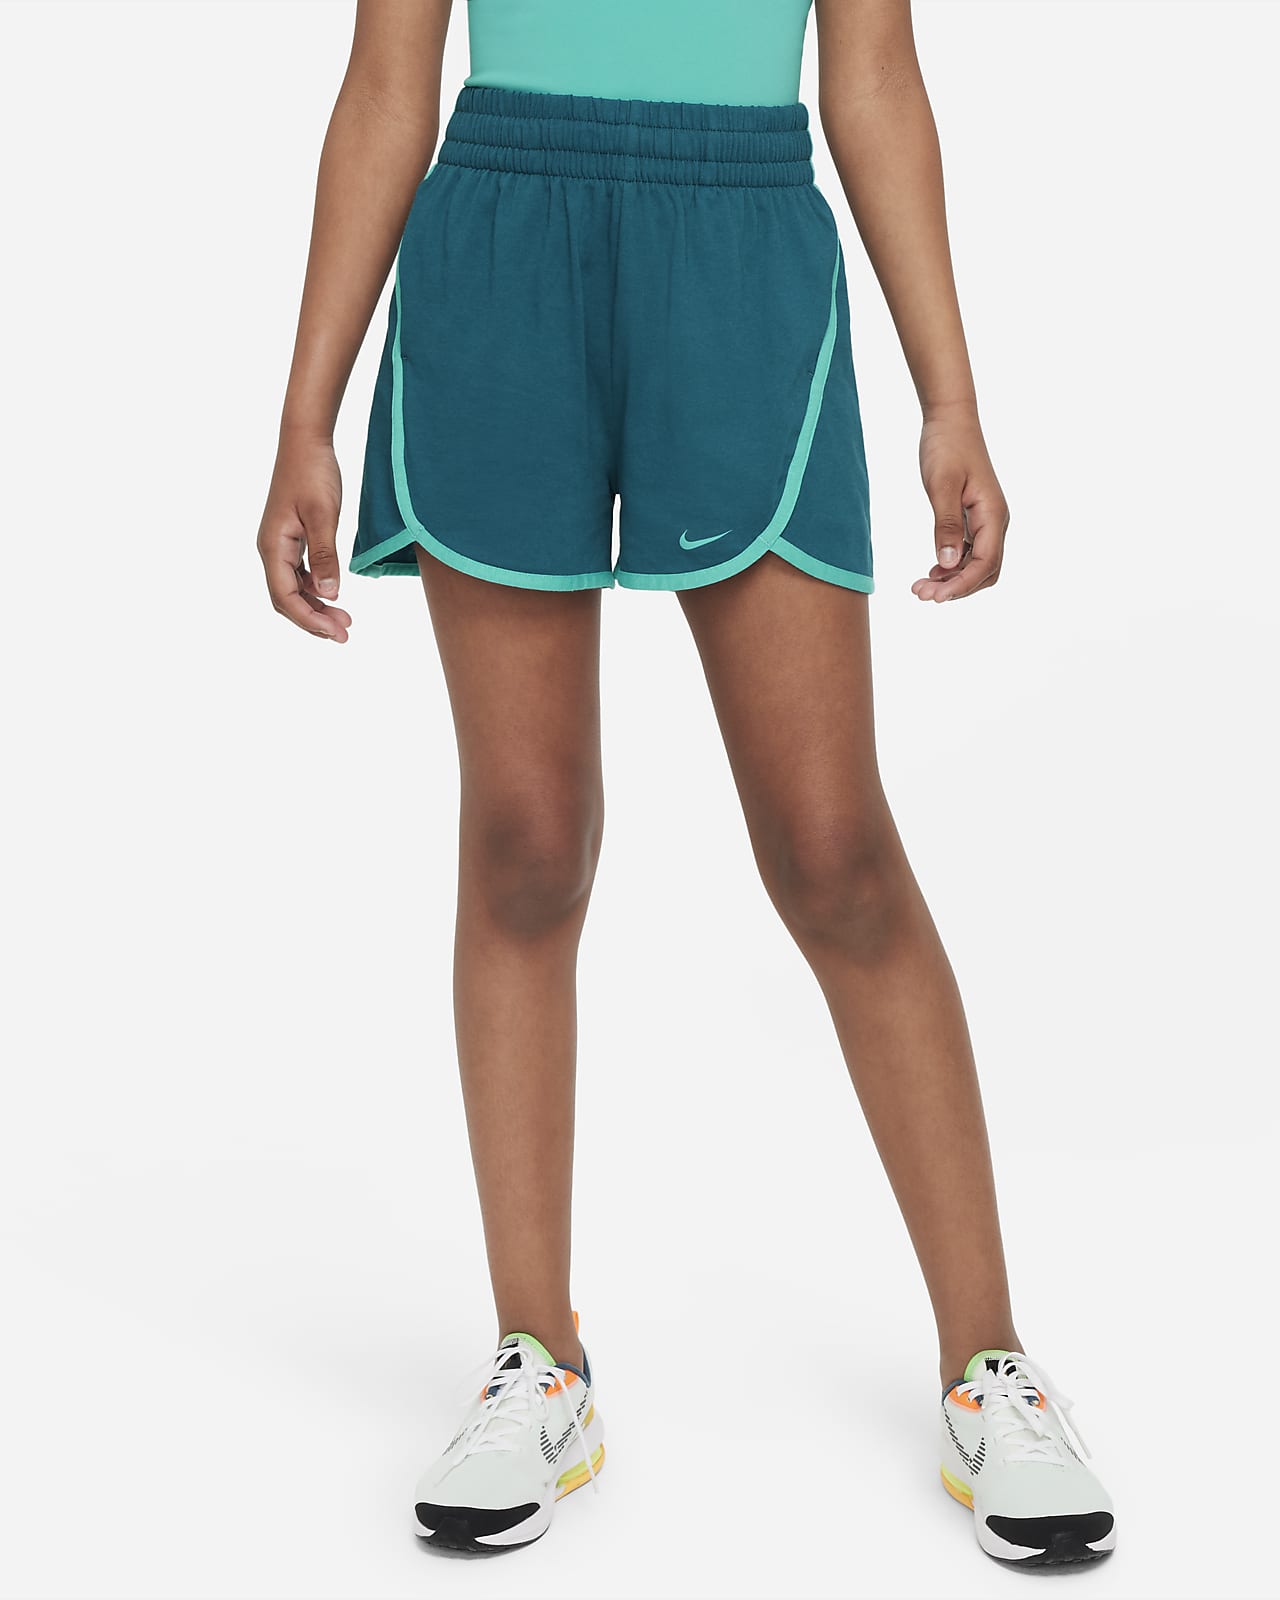 Nike Dri-FIT Breezy High-Waisted Training Shorts. .com